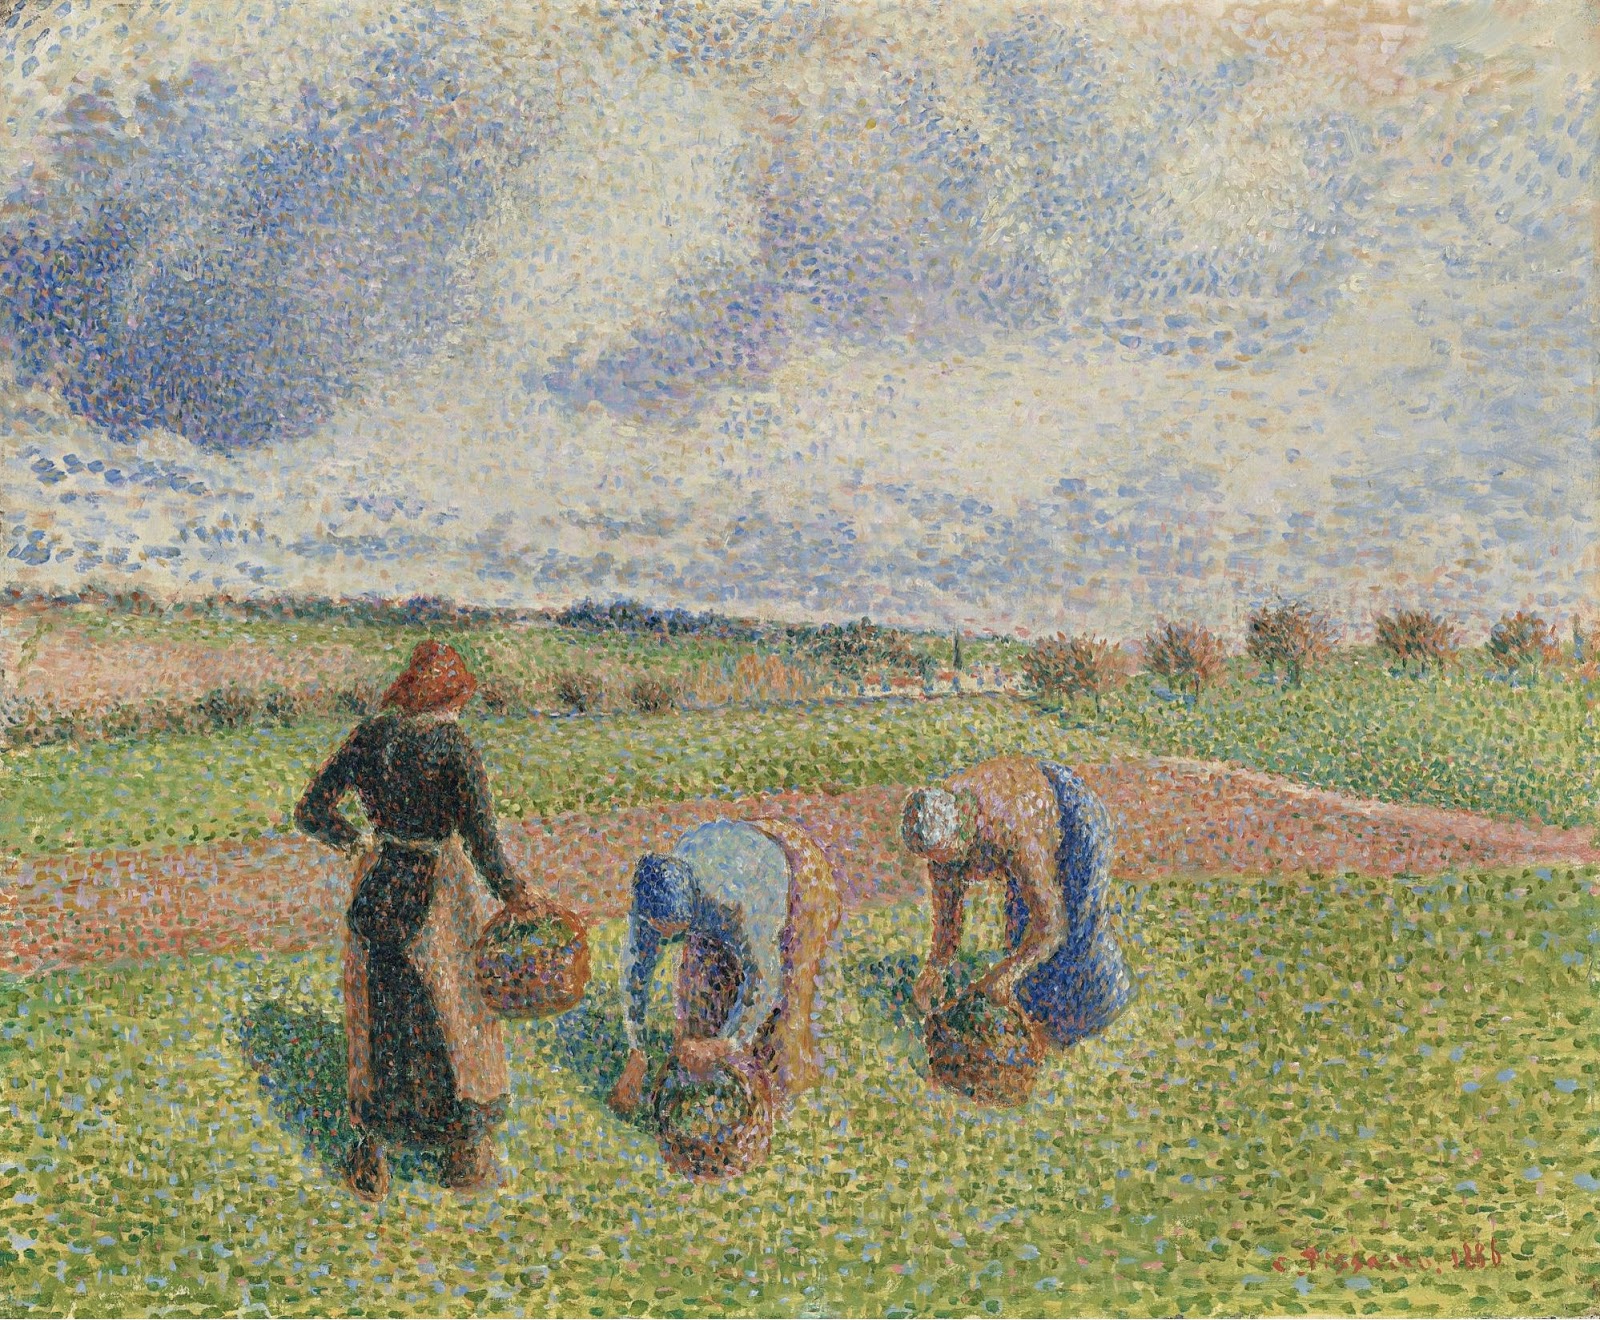 Camille+Pissarro-1830-1903 (393).jpg